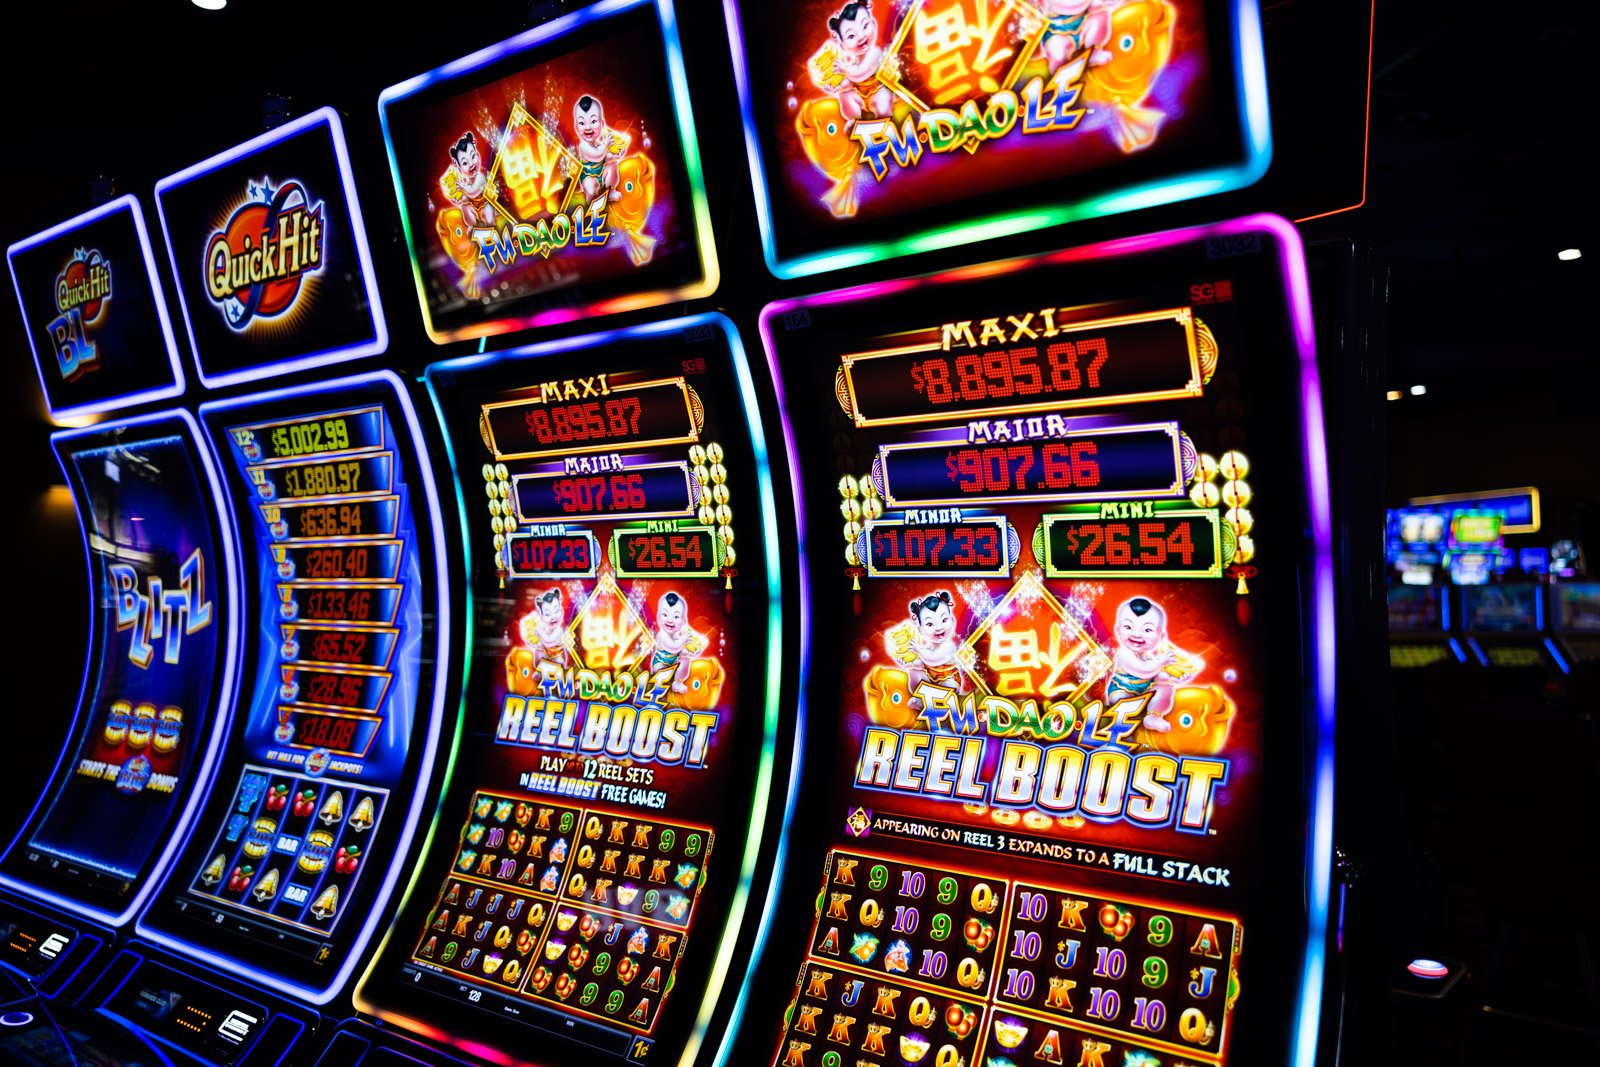 rosebud-casino-gaming-floor-slot-machines-near-valentine-nebraska-4.jpg